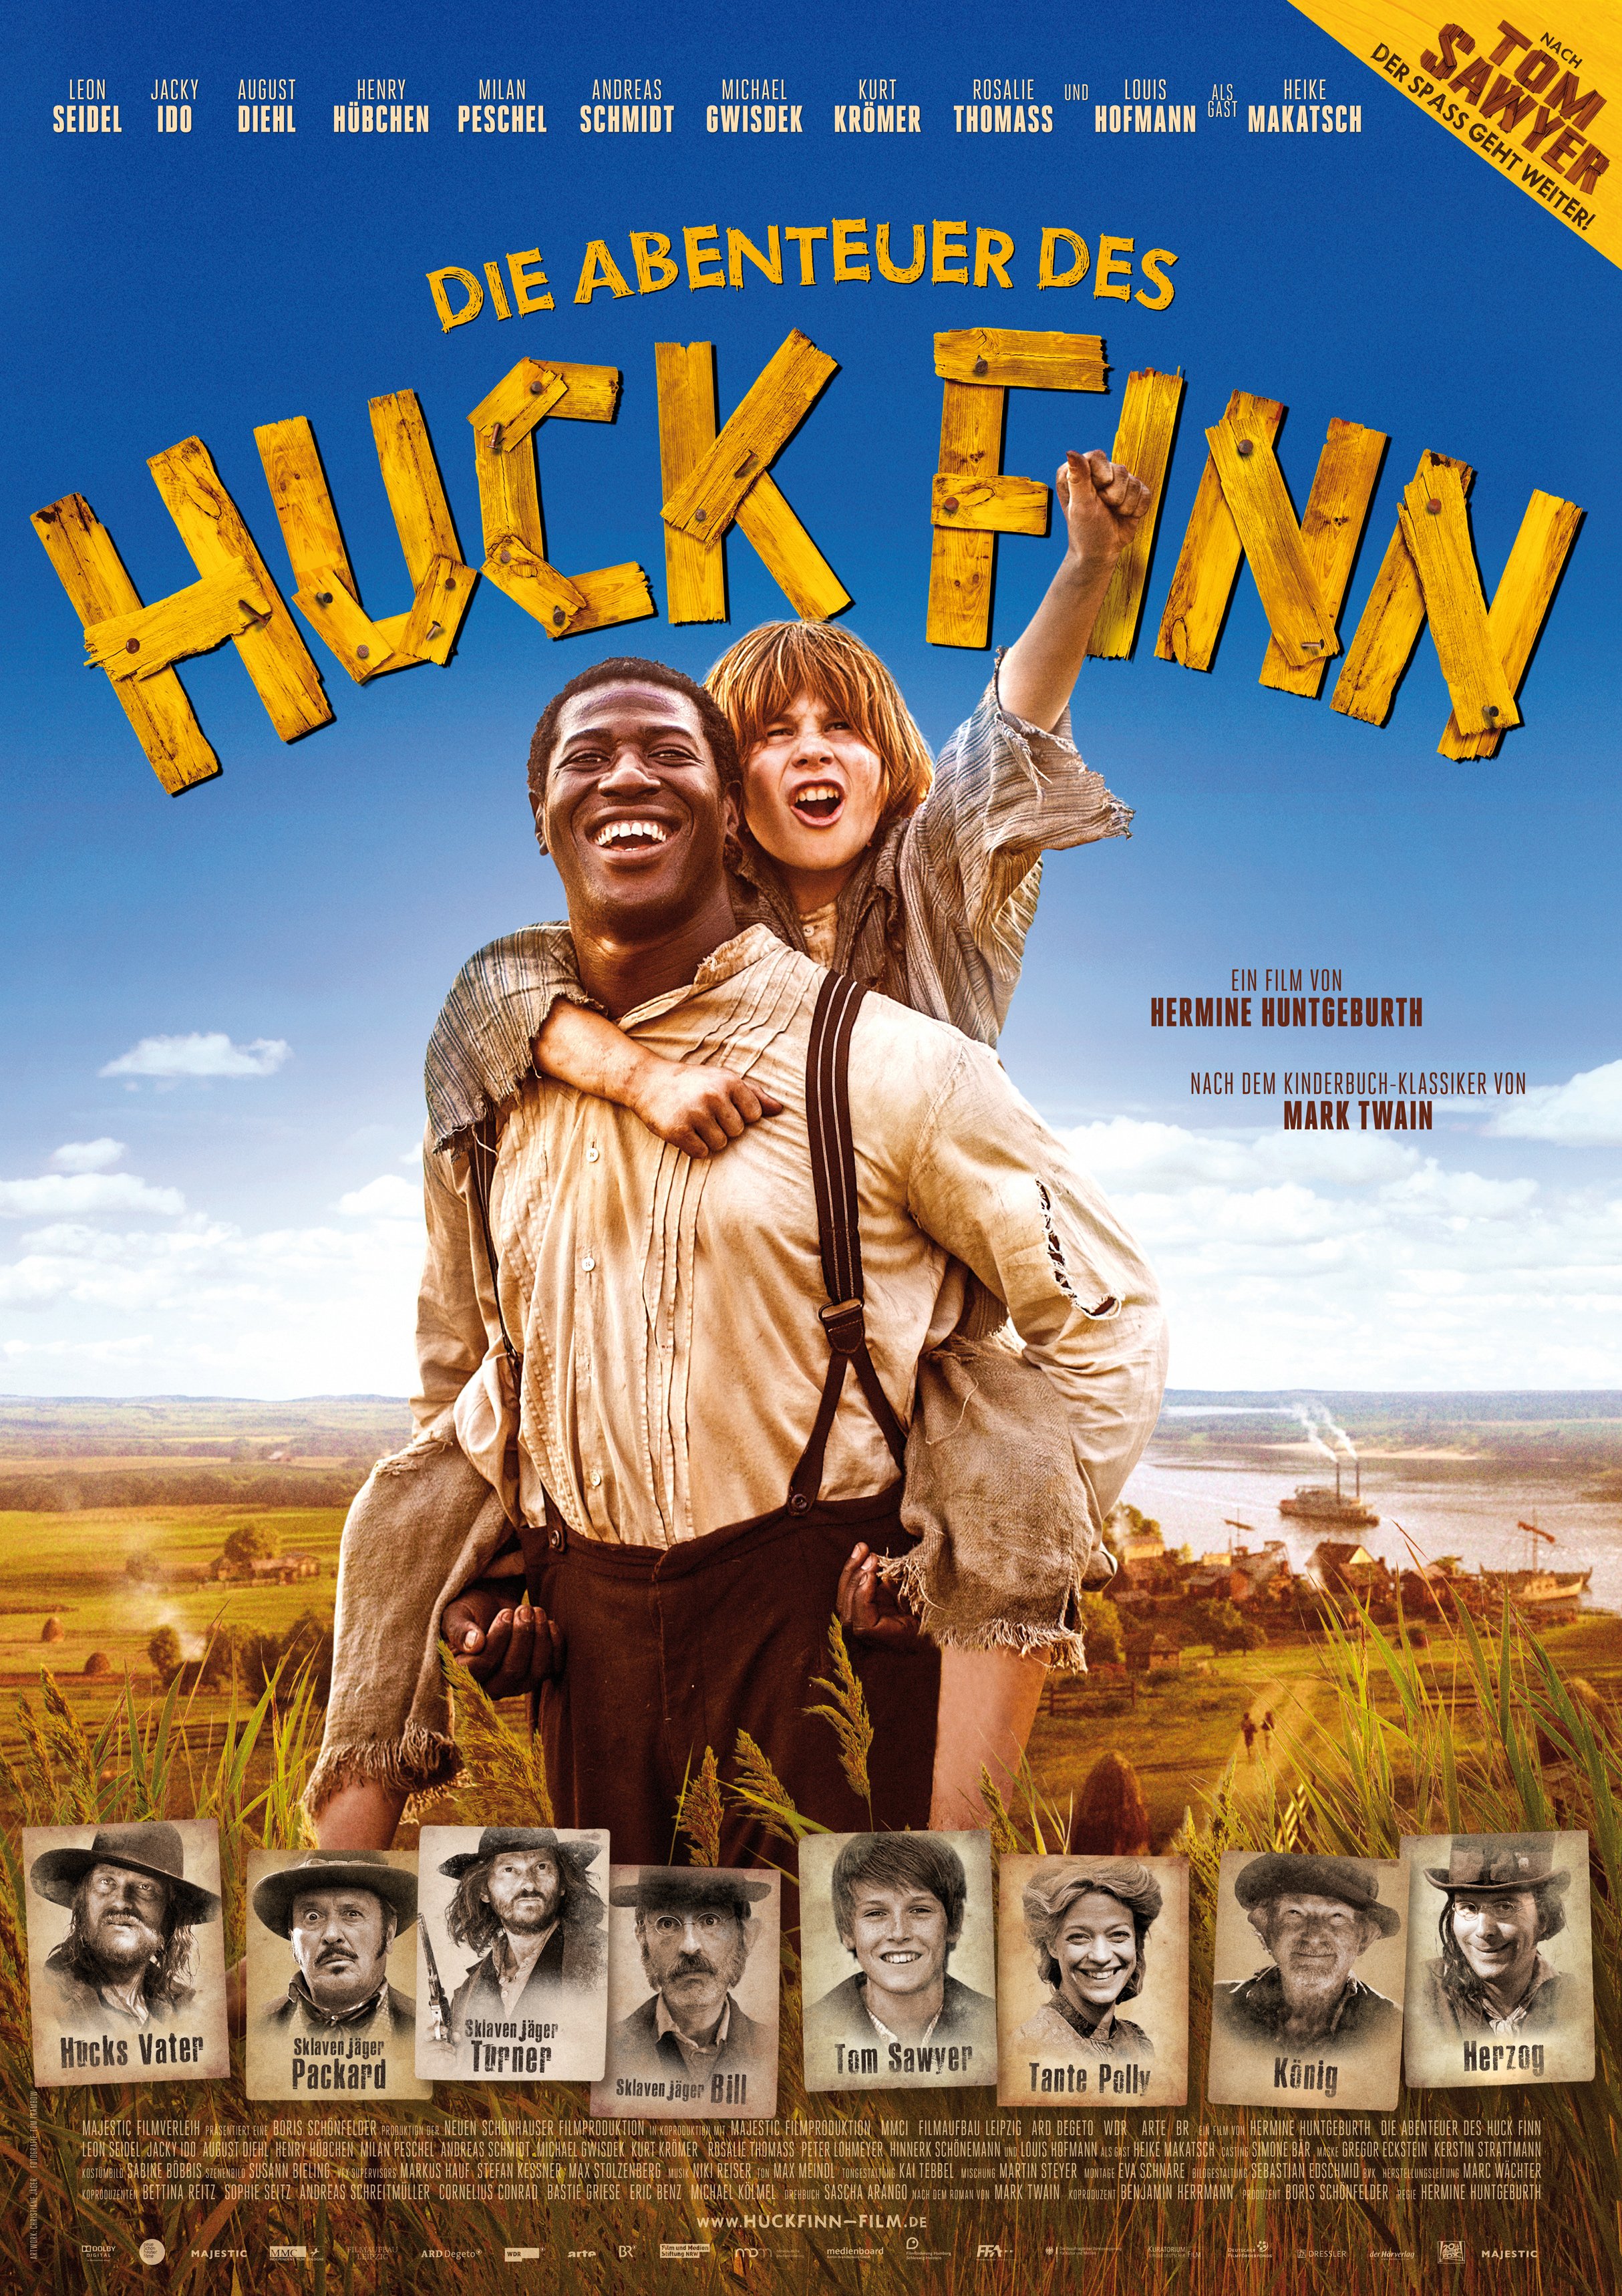 L'affiche originale du film The Adventures of Huck Finn en allemand